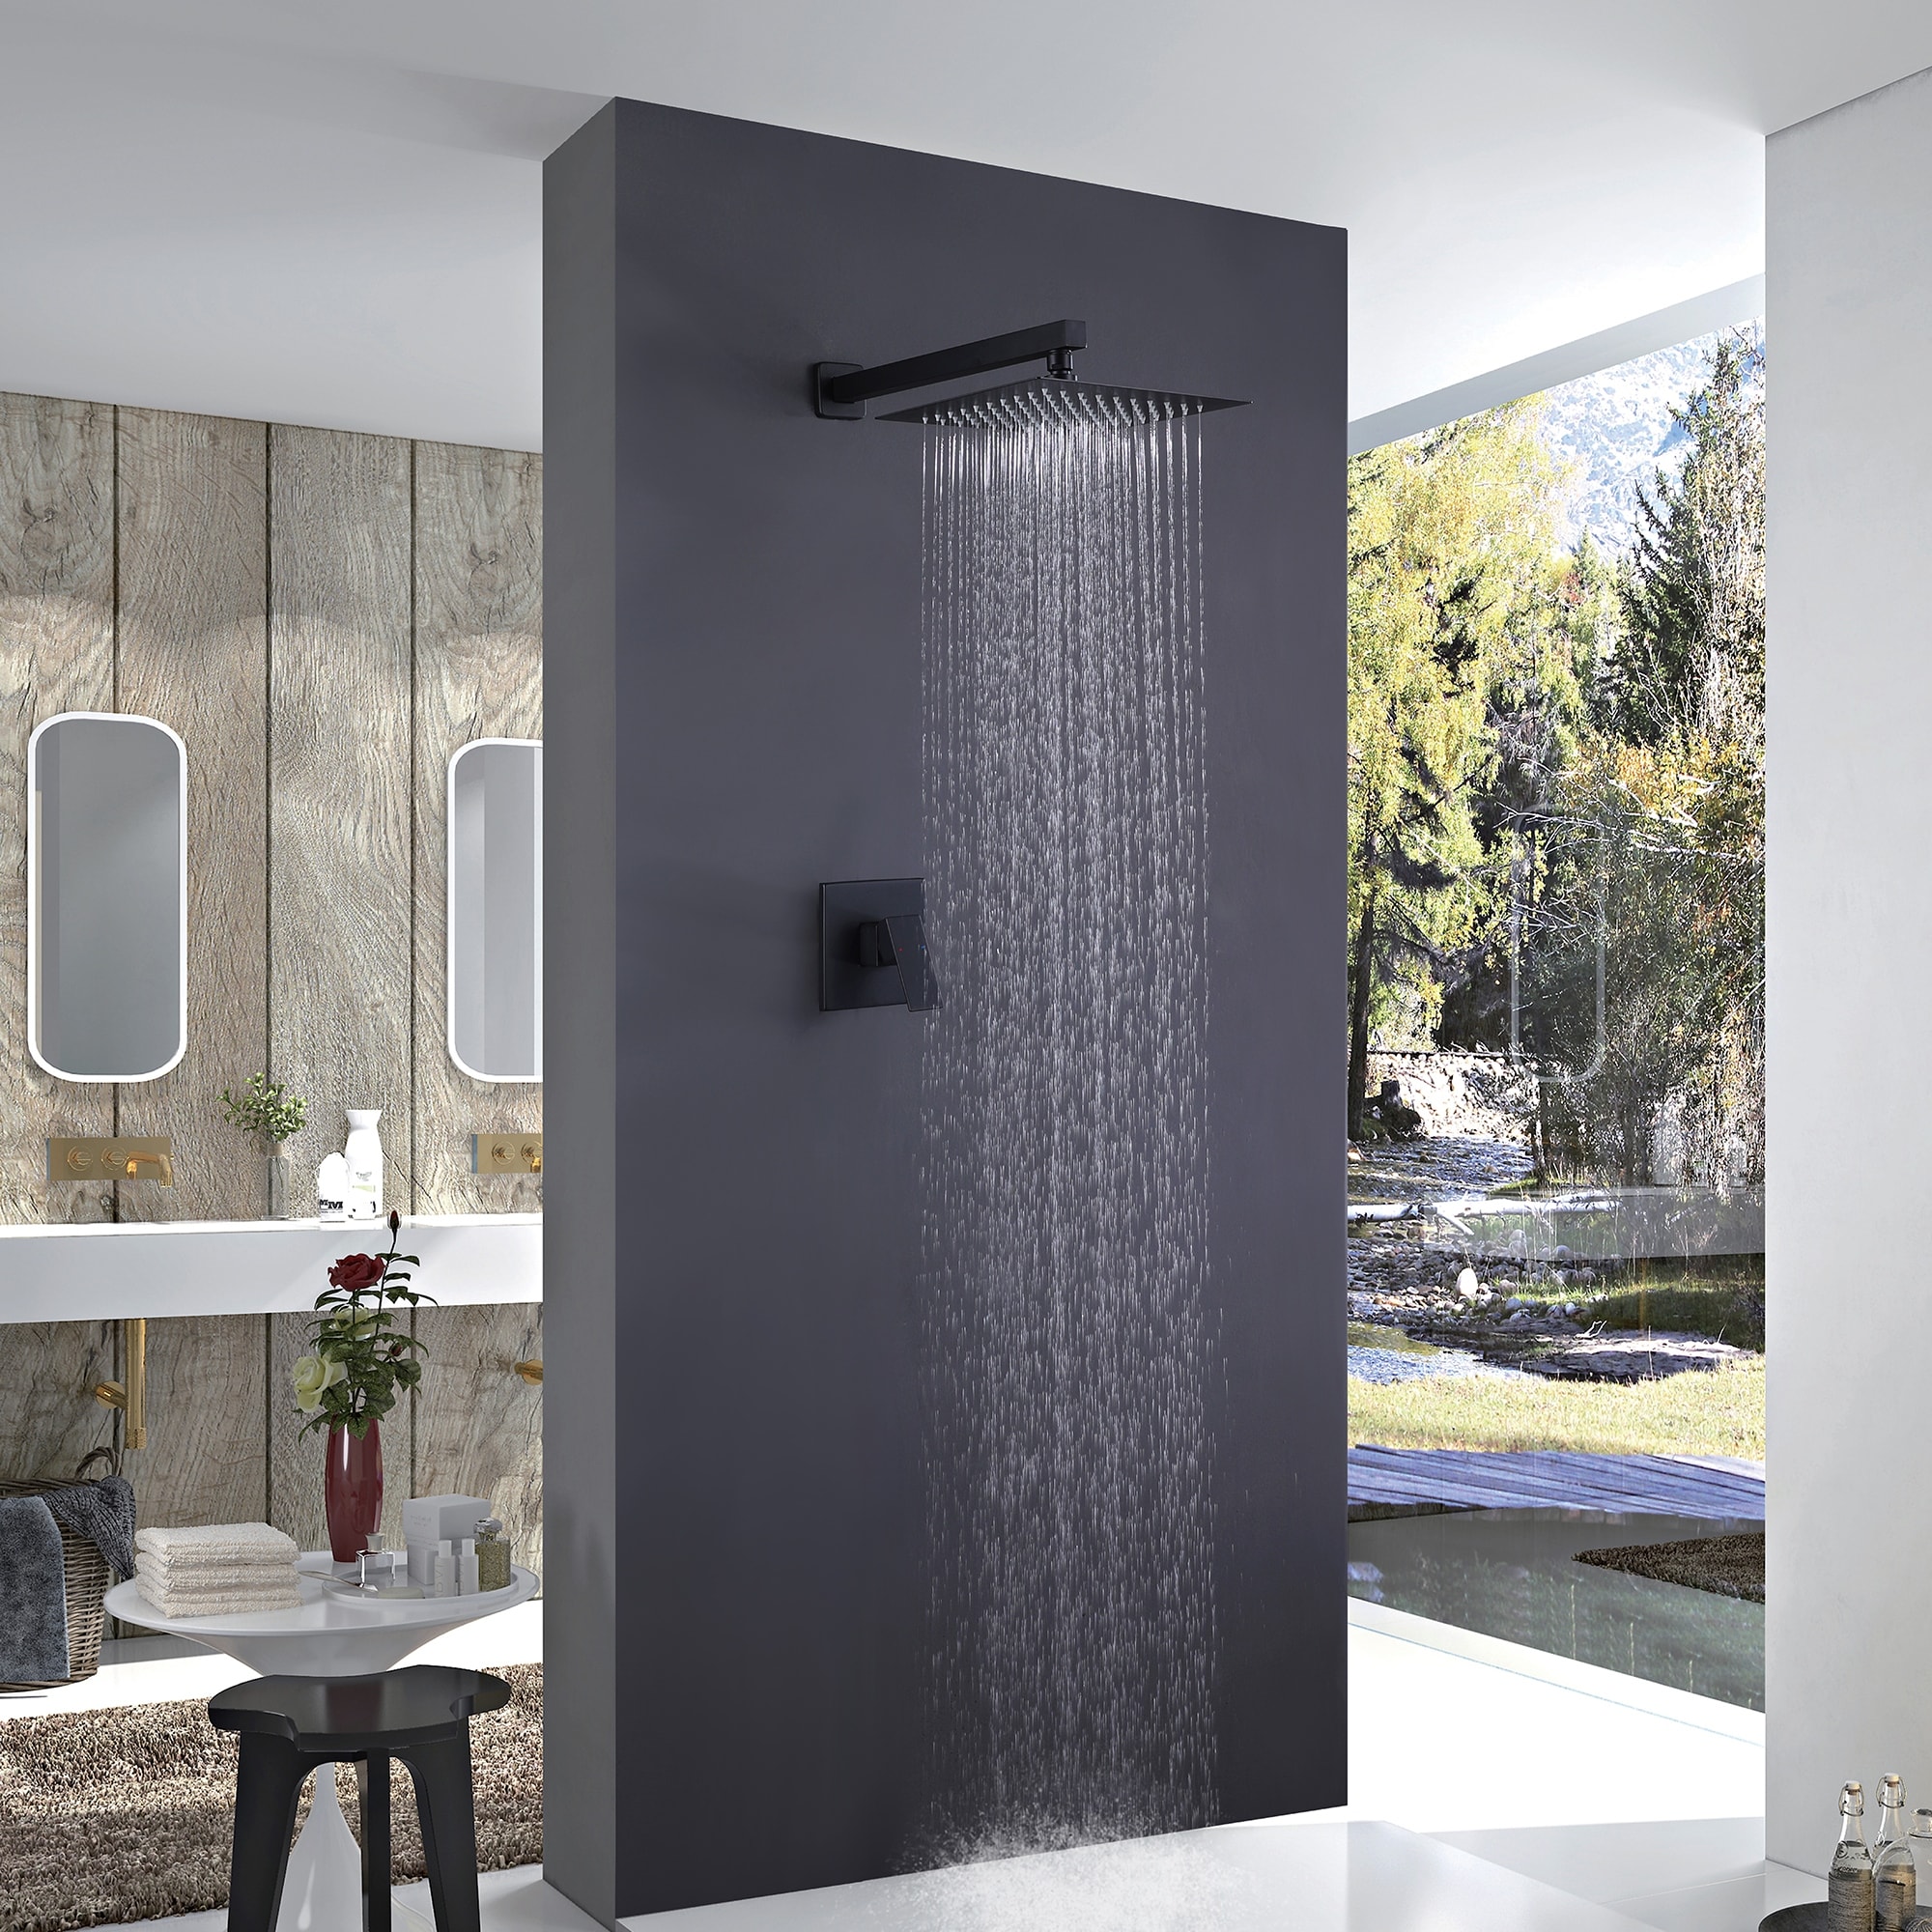 https://ak1.ostkcdn.com/images/products/is/images/direct/ee3d683c308fa80a489f7d187f505864c73c56e9/Square-Dual-Handle-2-Function-Concealed-Bathroom-Shower-Set.jpg